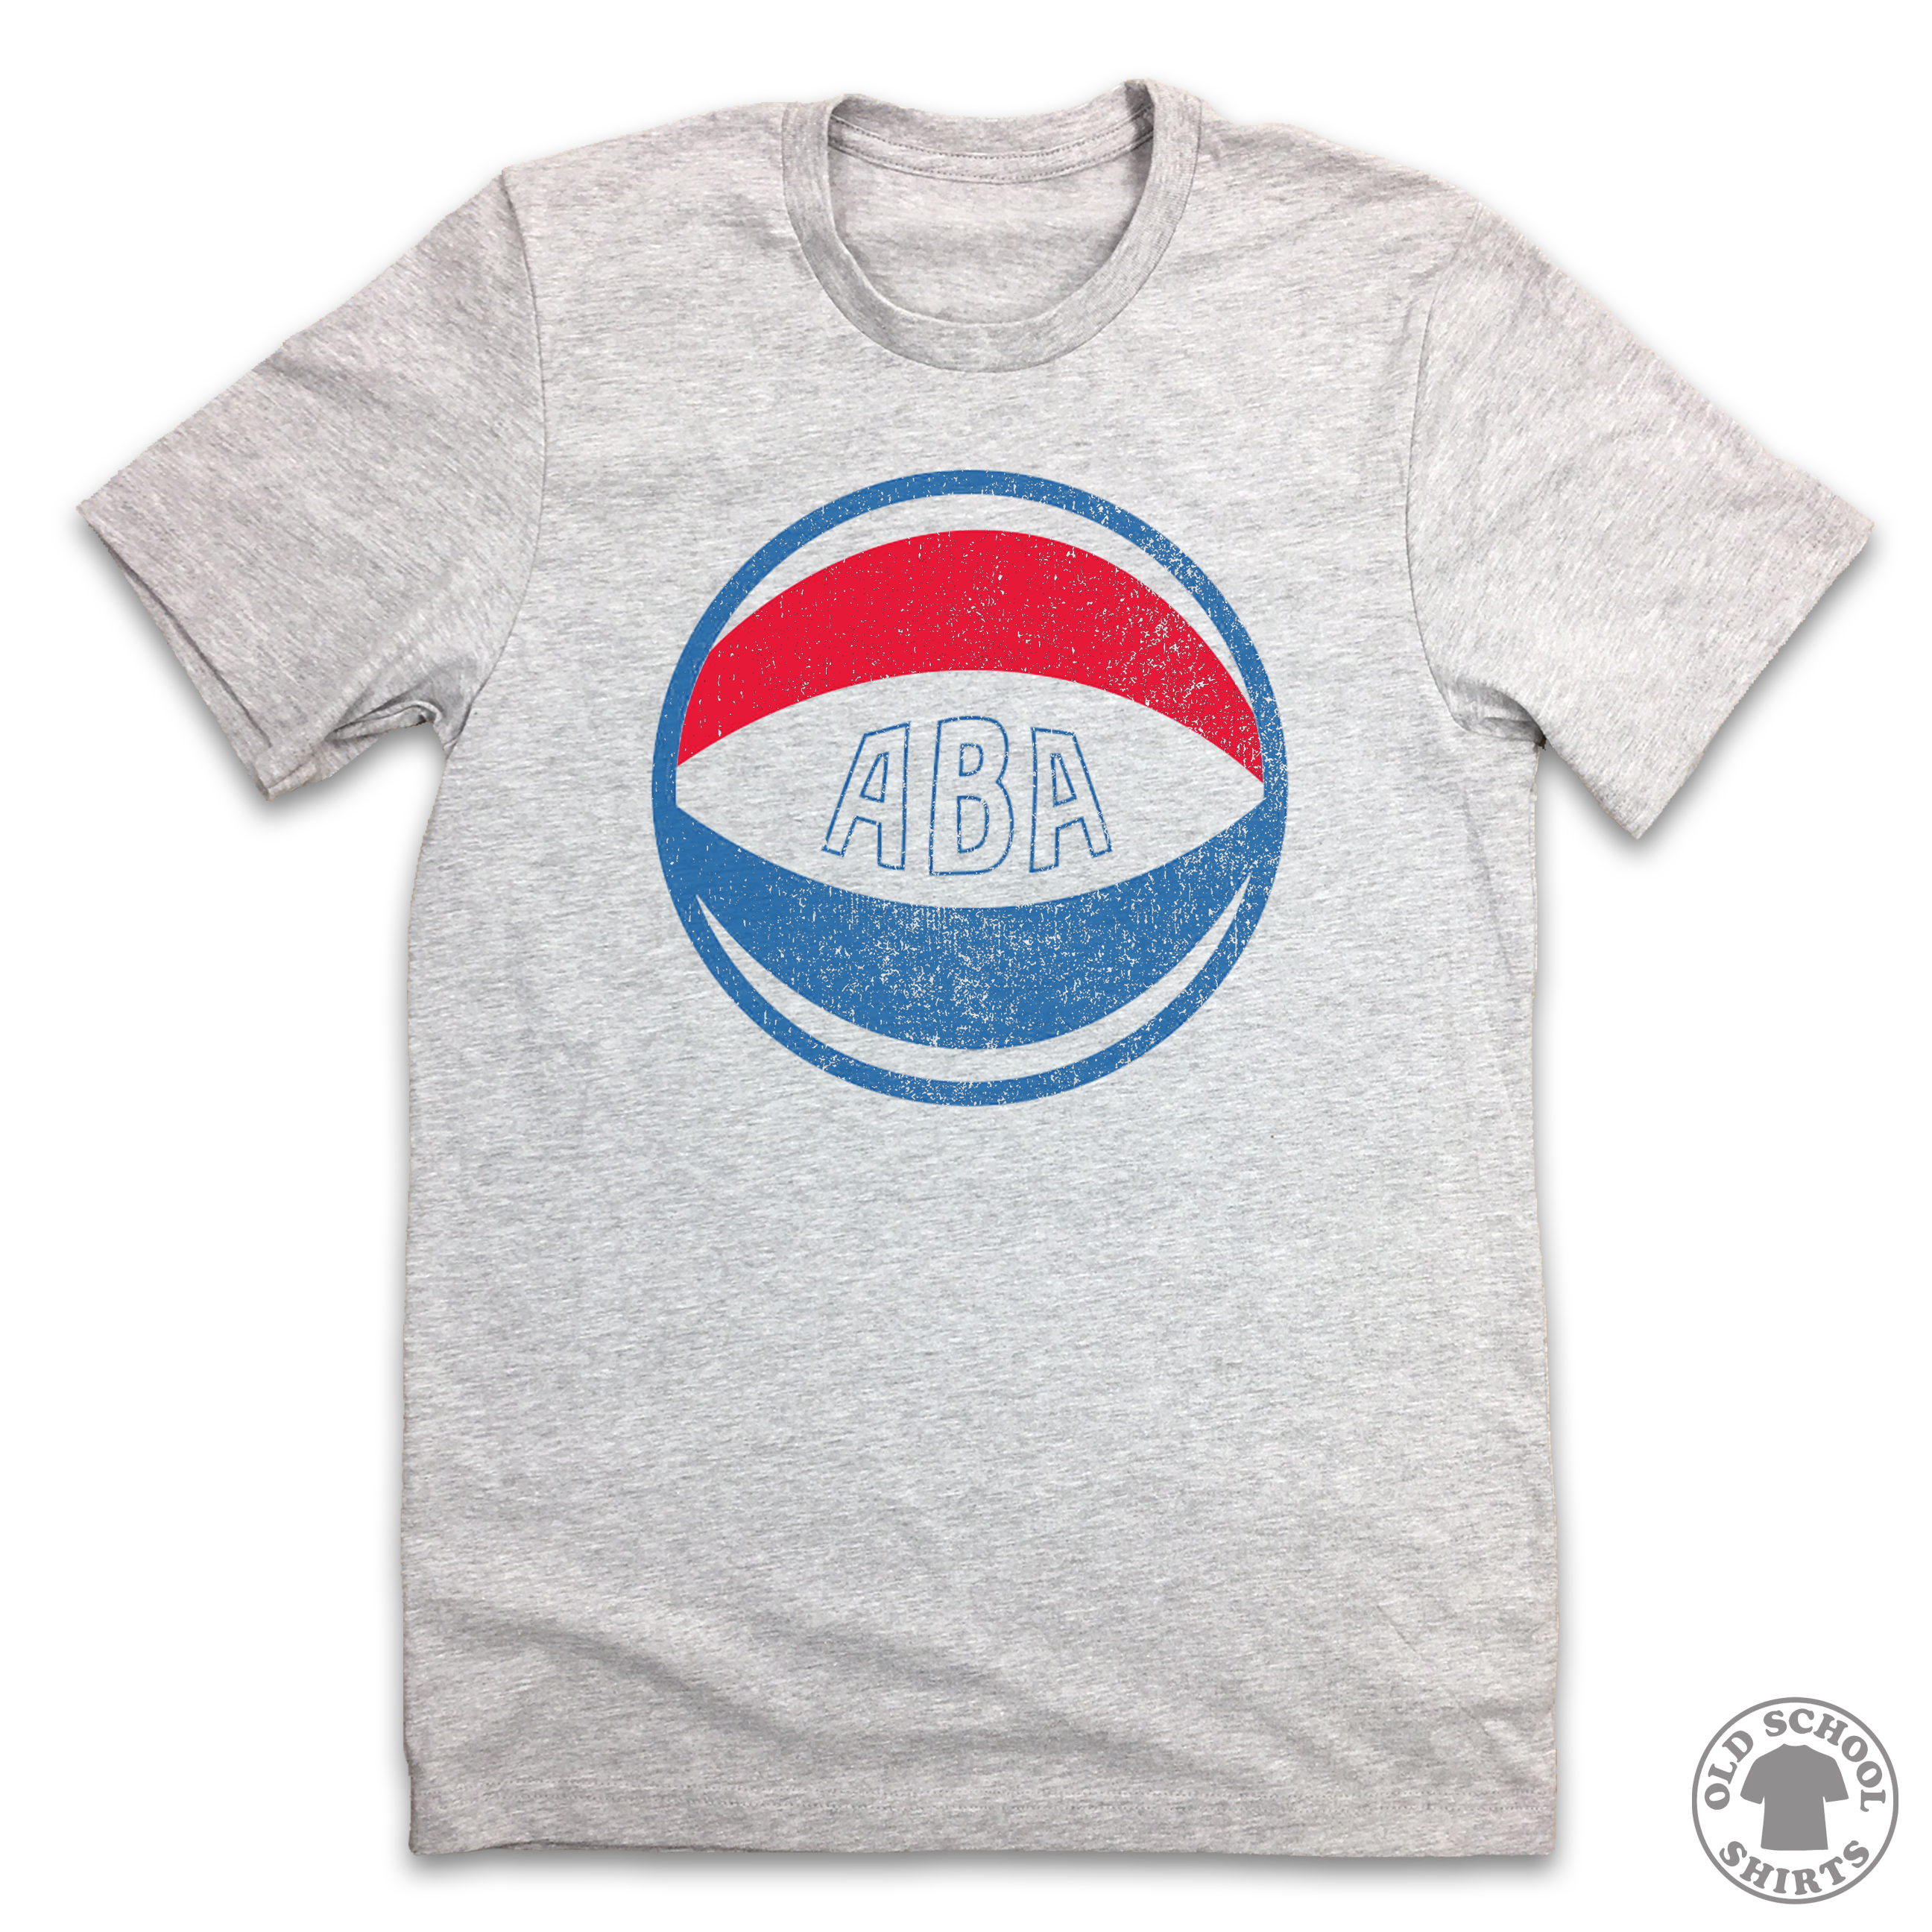 Buffalo Braves Defunct Professional Basketbal Team Retro Vintaget T Shirt